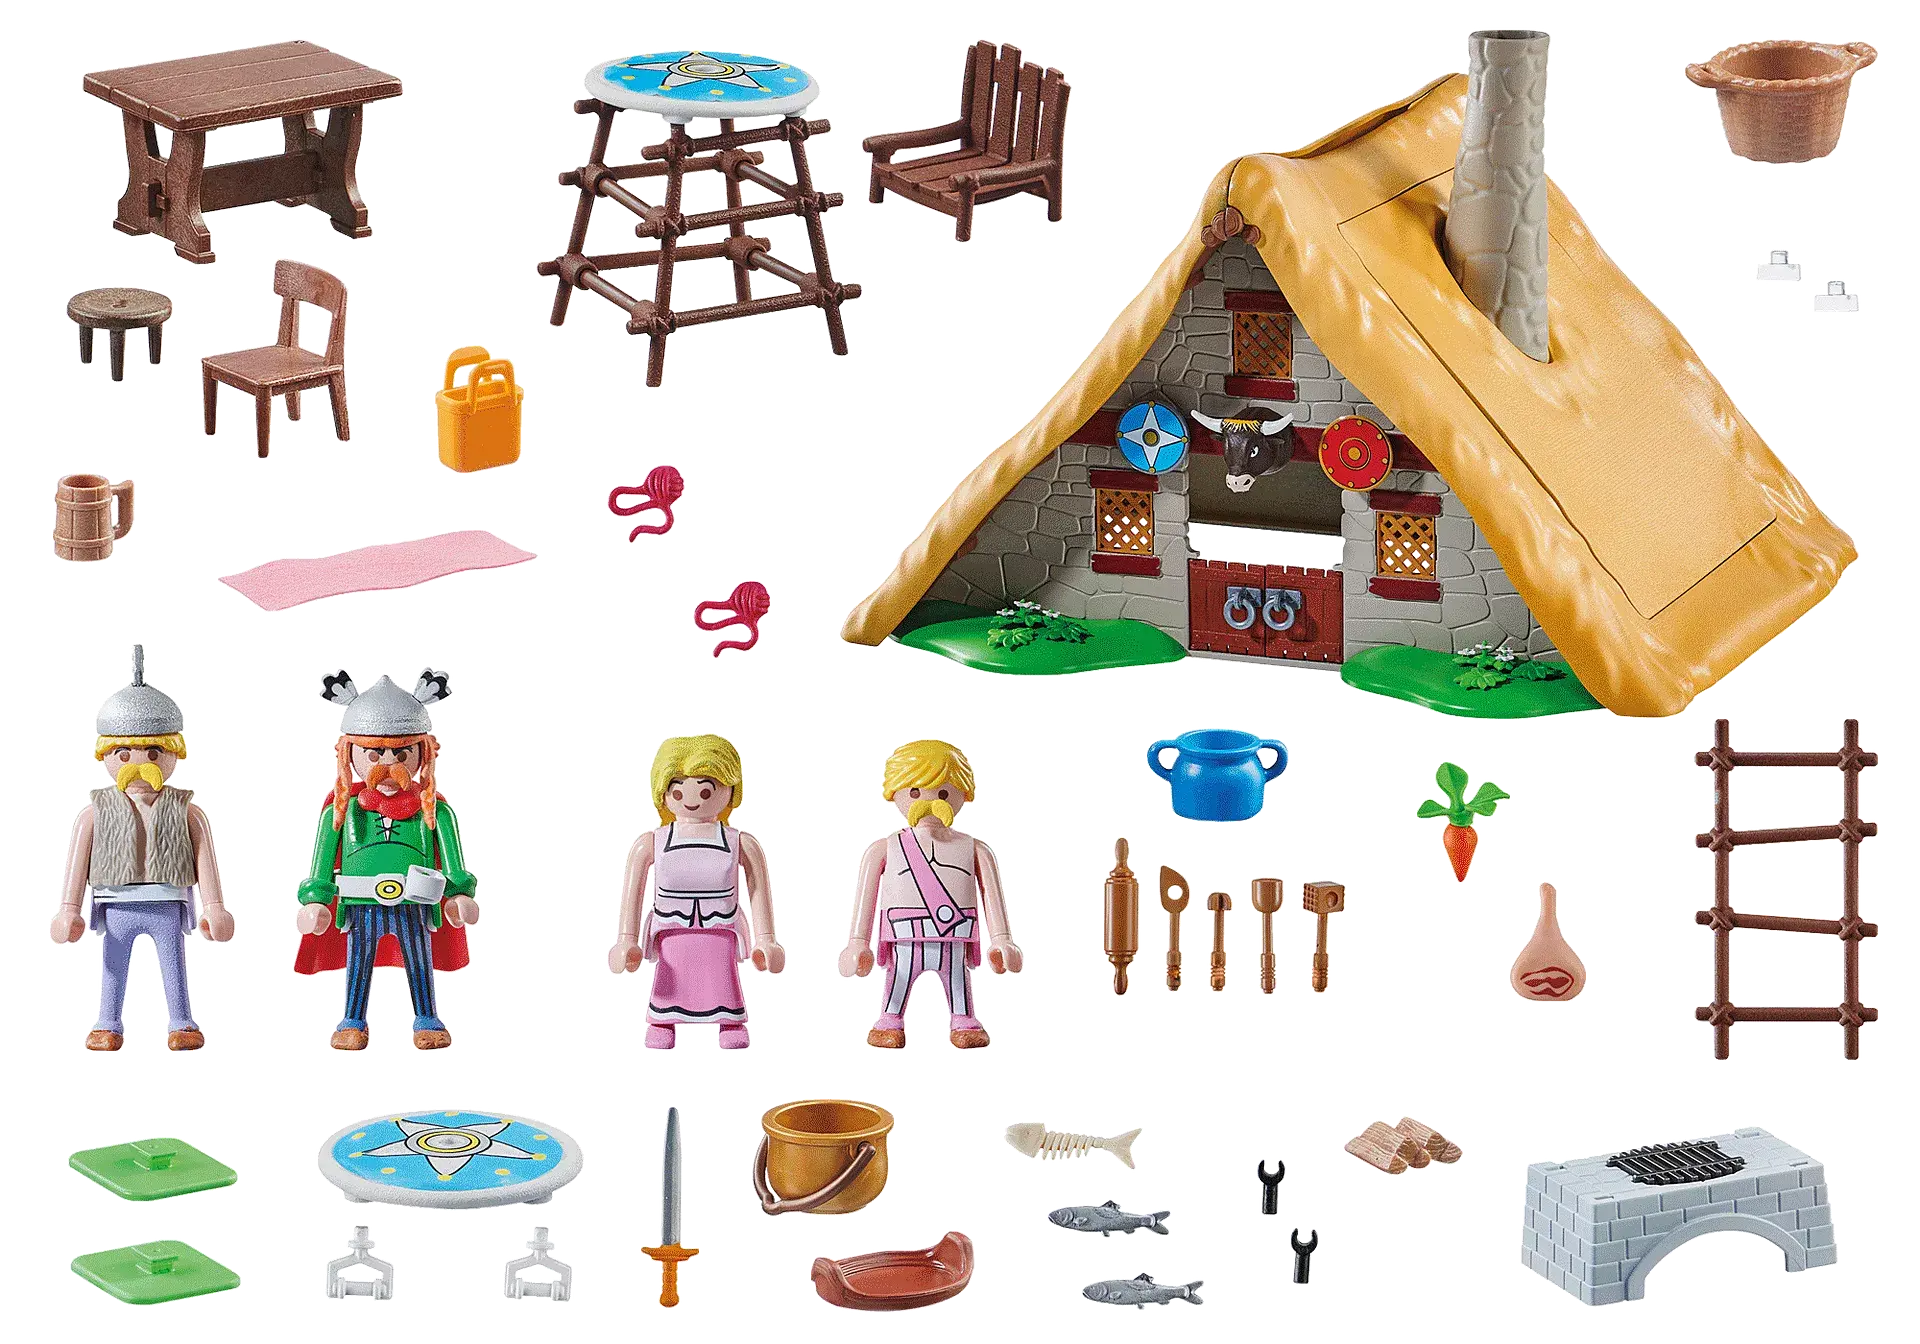 Playmobil Playmobil Astérix 70932 - La hutte d'Abraracourcix